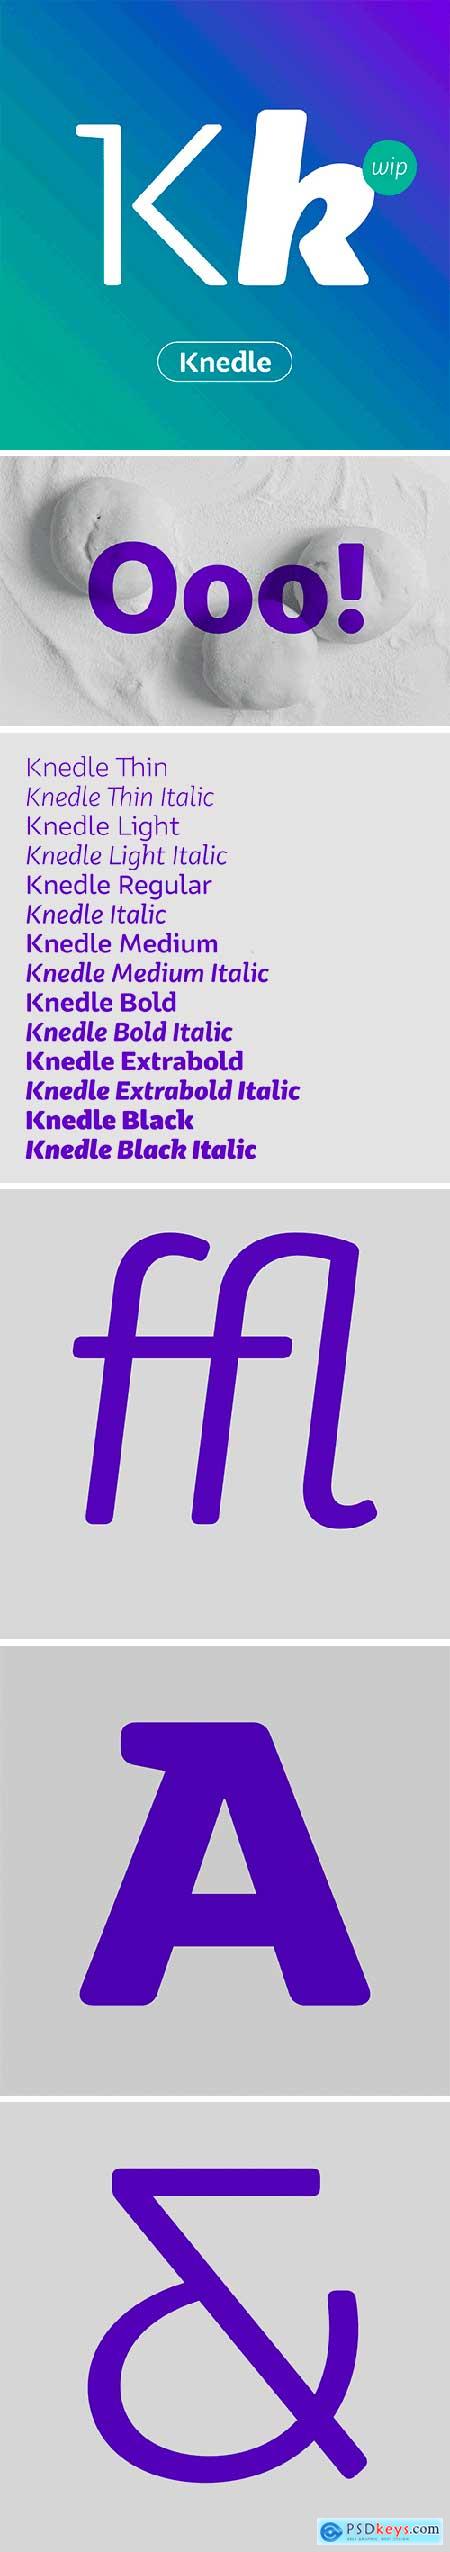 Knedle Font Family